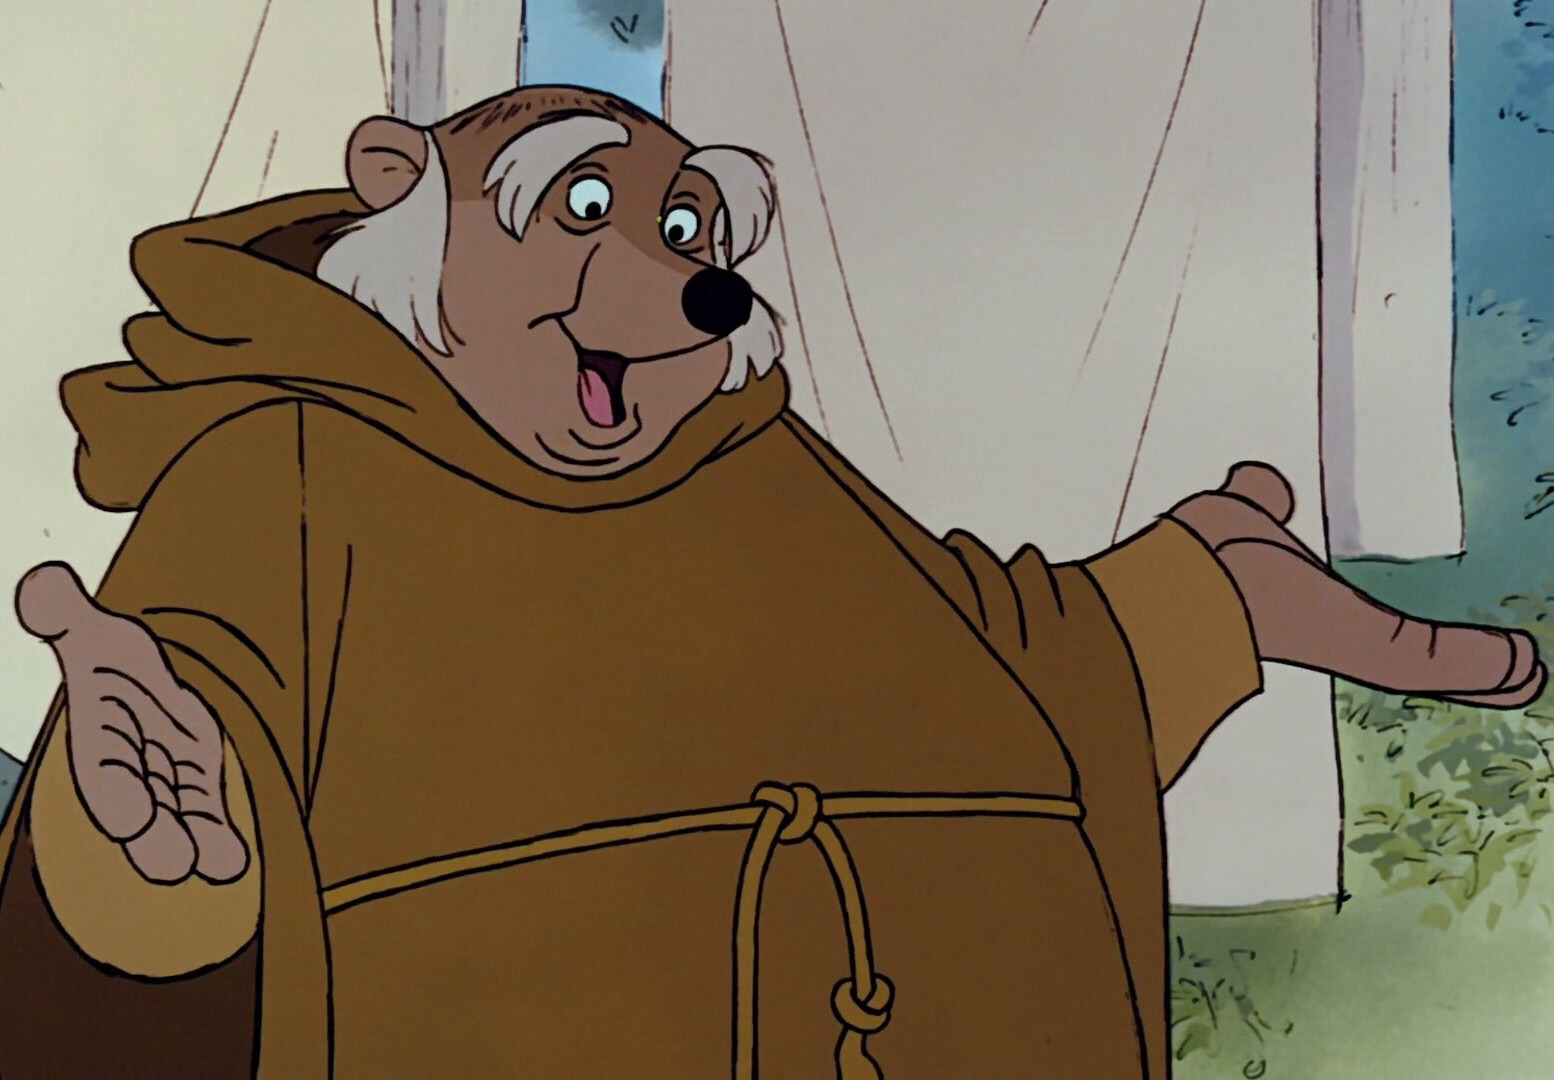 Robin Hoods: Breakout Friar Tuck